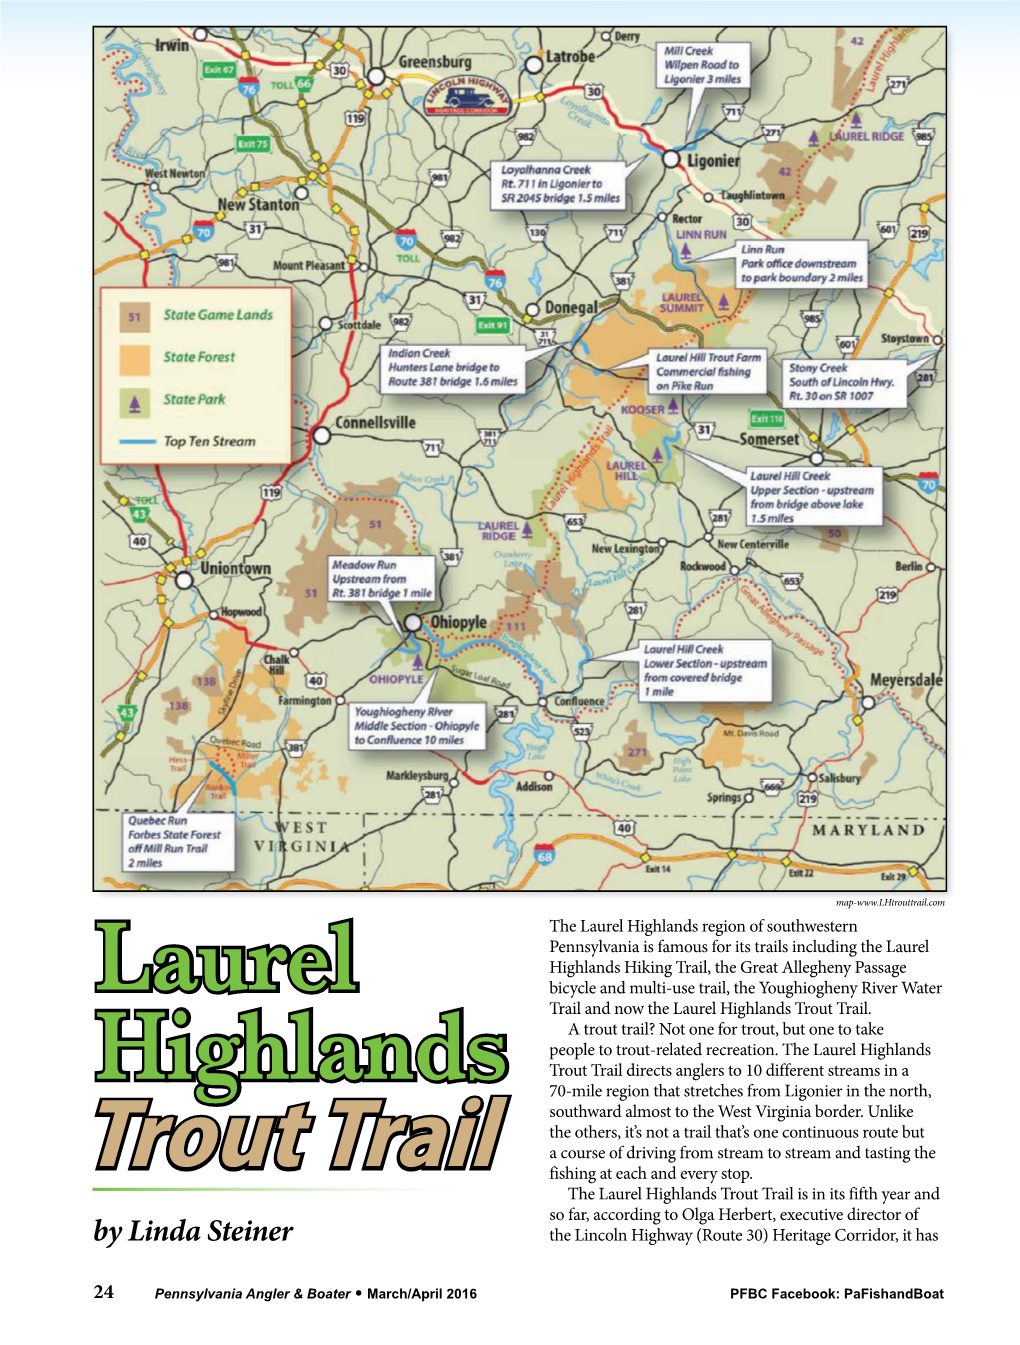 Laurel Highlands Trout Trail by Linda Steiner